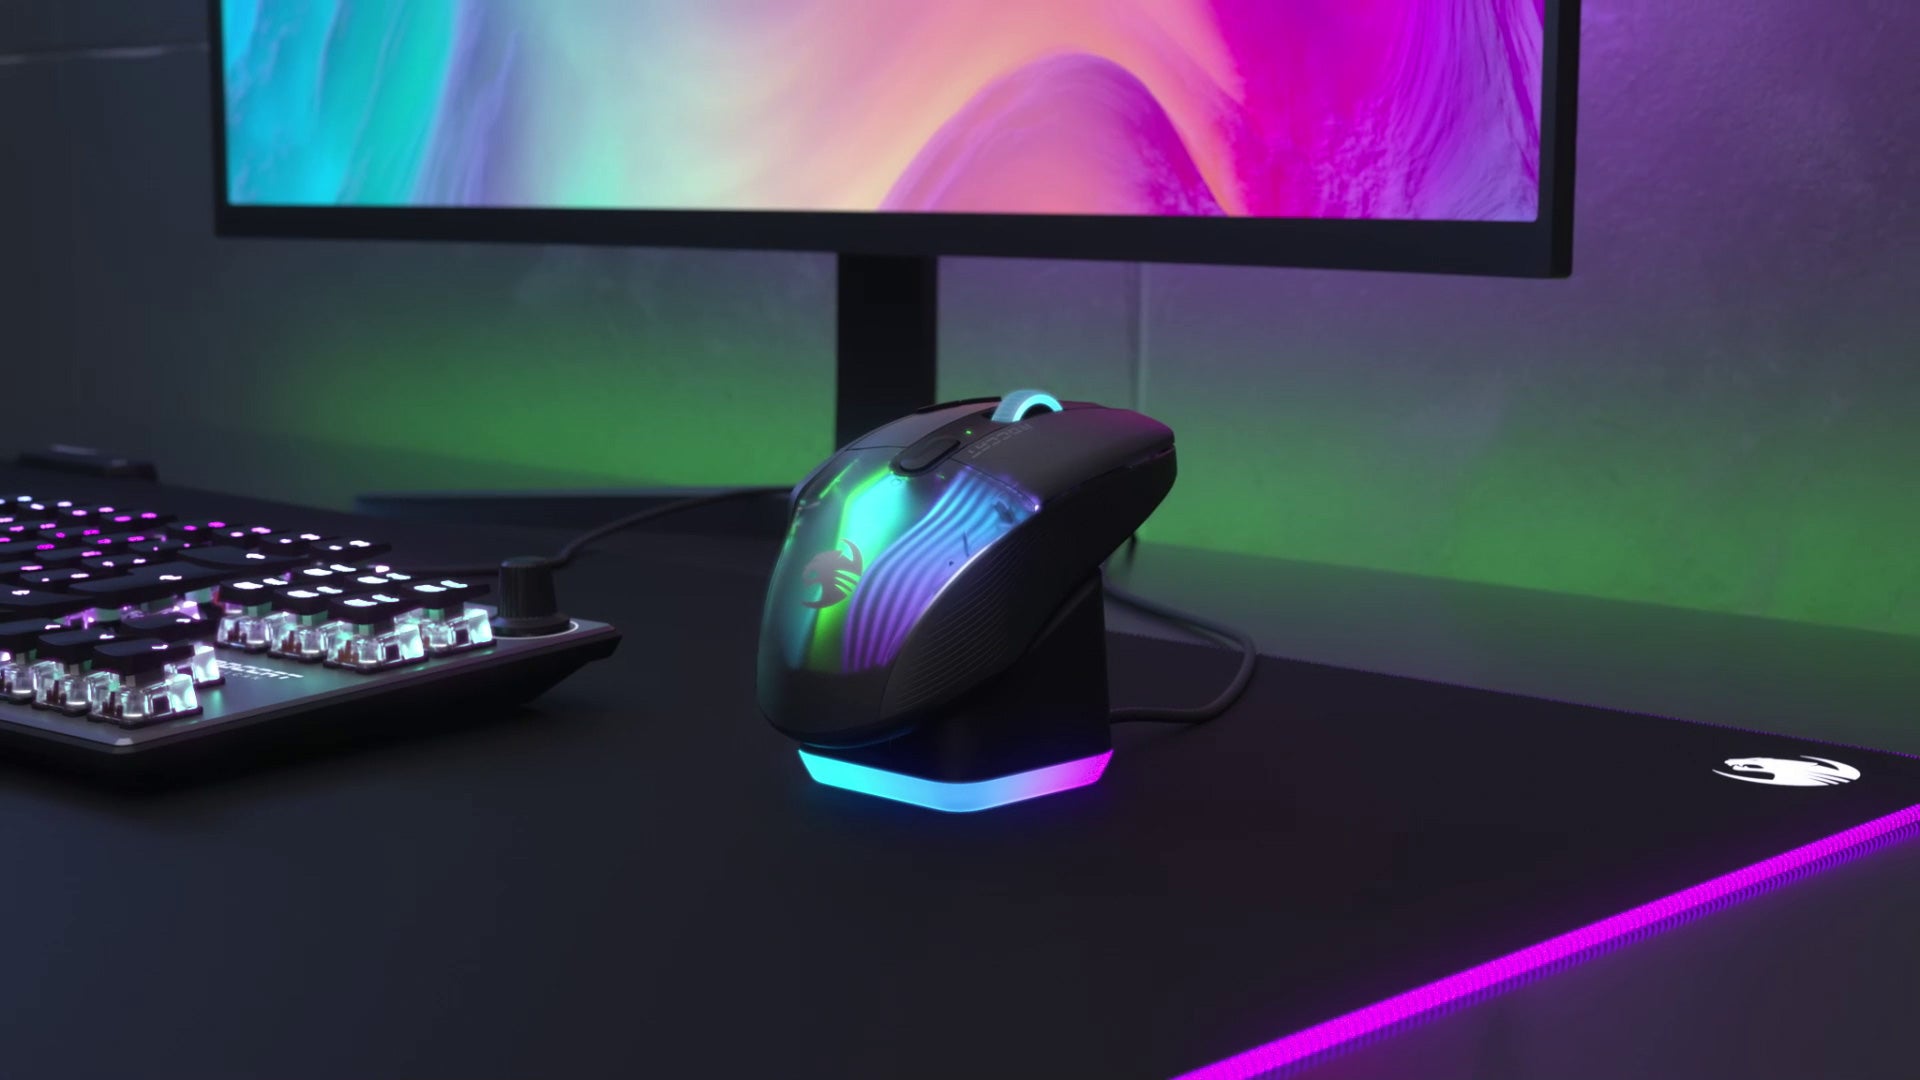 Kone XP Air Gaming Mouse & Charging Dock | ROCCAT